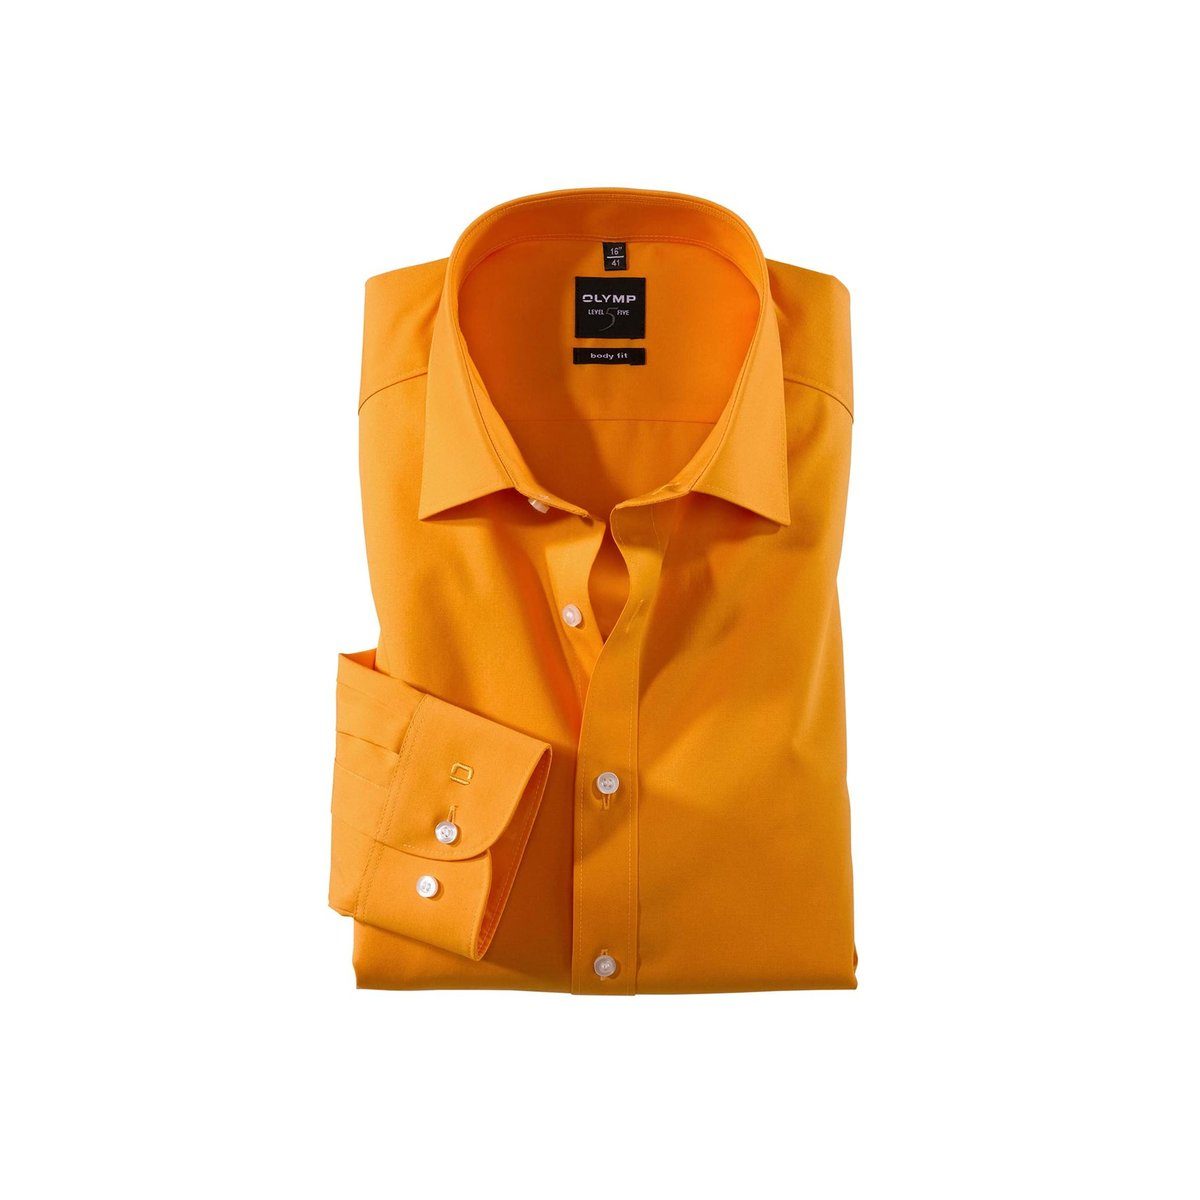 OLYMP hellorange orange Unterhemd keine Angabe, Angabe) 1-St., (keine